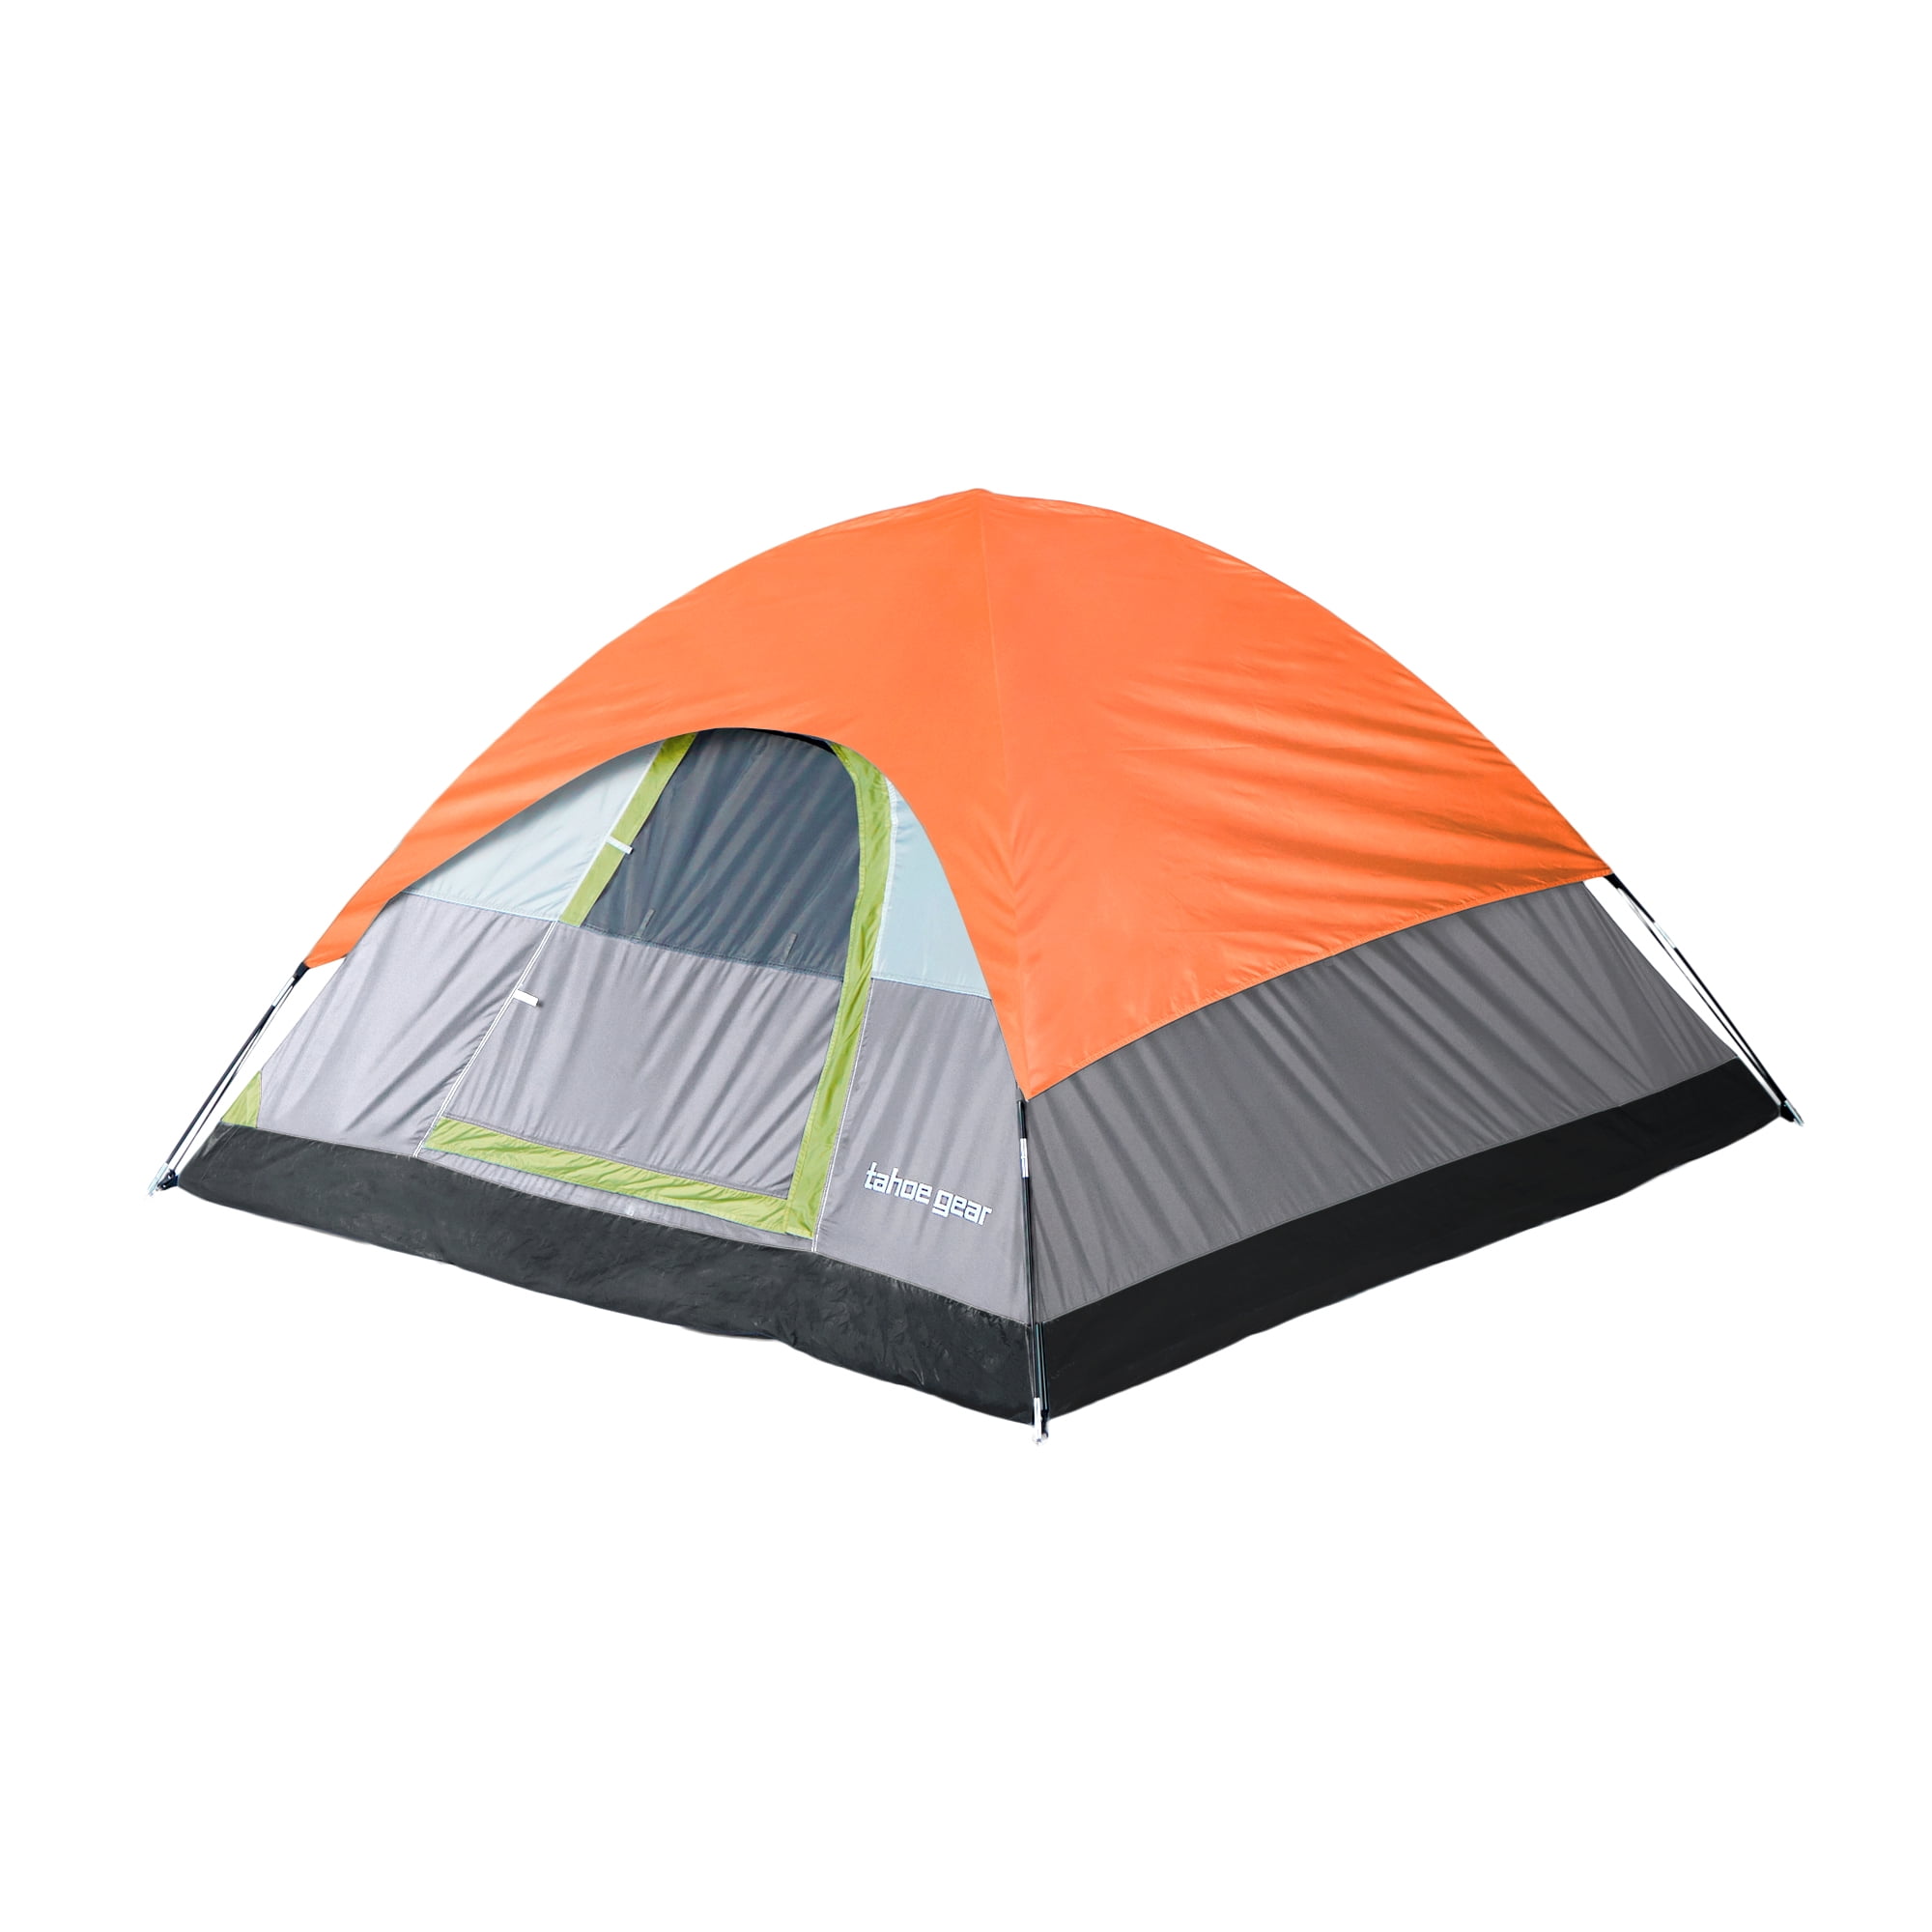 3-4 People 60 Seconds Set Up Camping Tent,Waterproof Pop Up 